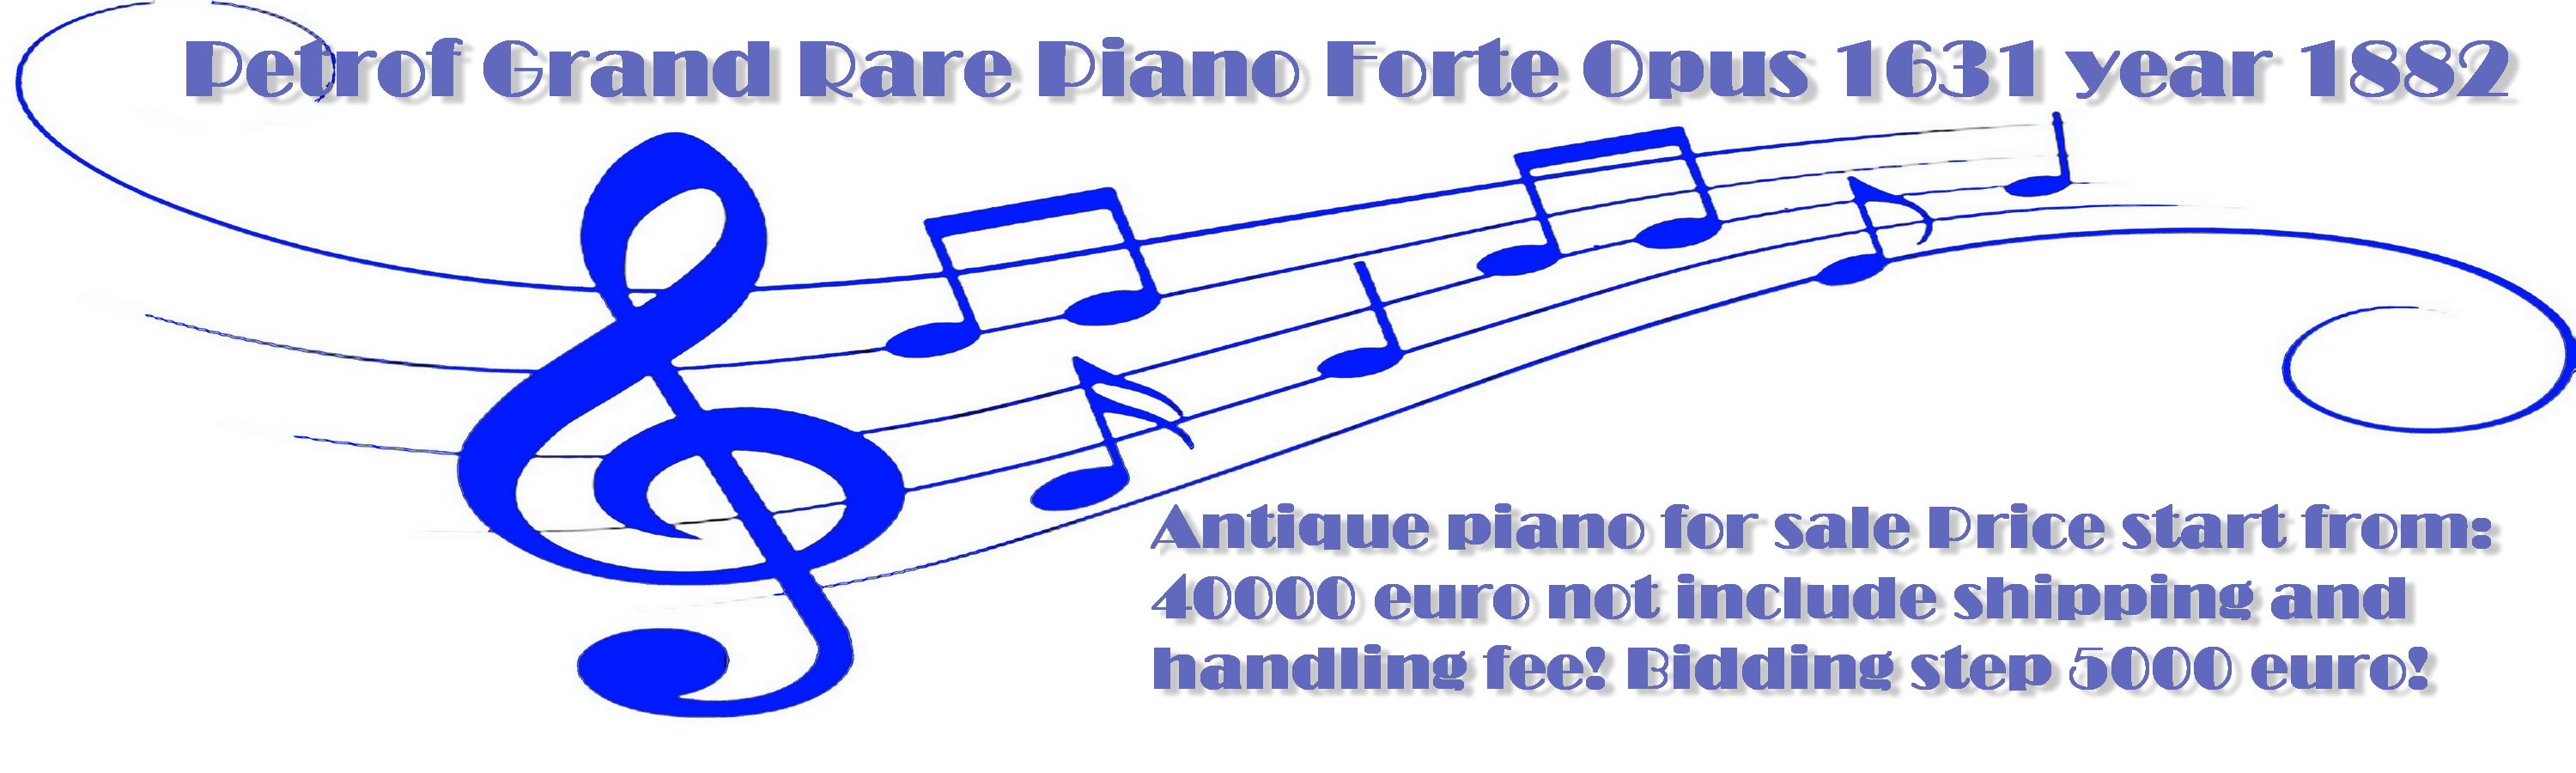 Petrof Grand Rare Piano Forte Opus 1631 year 1882